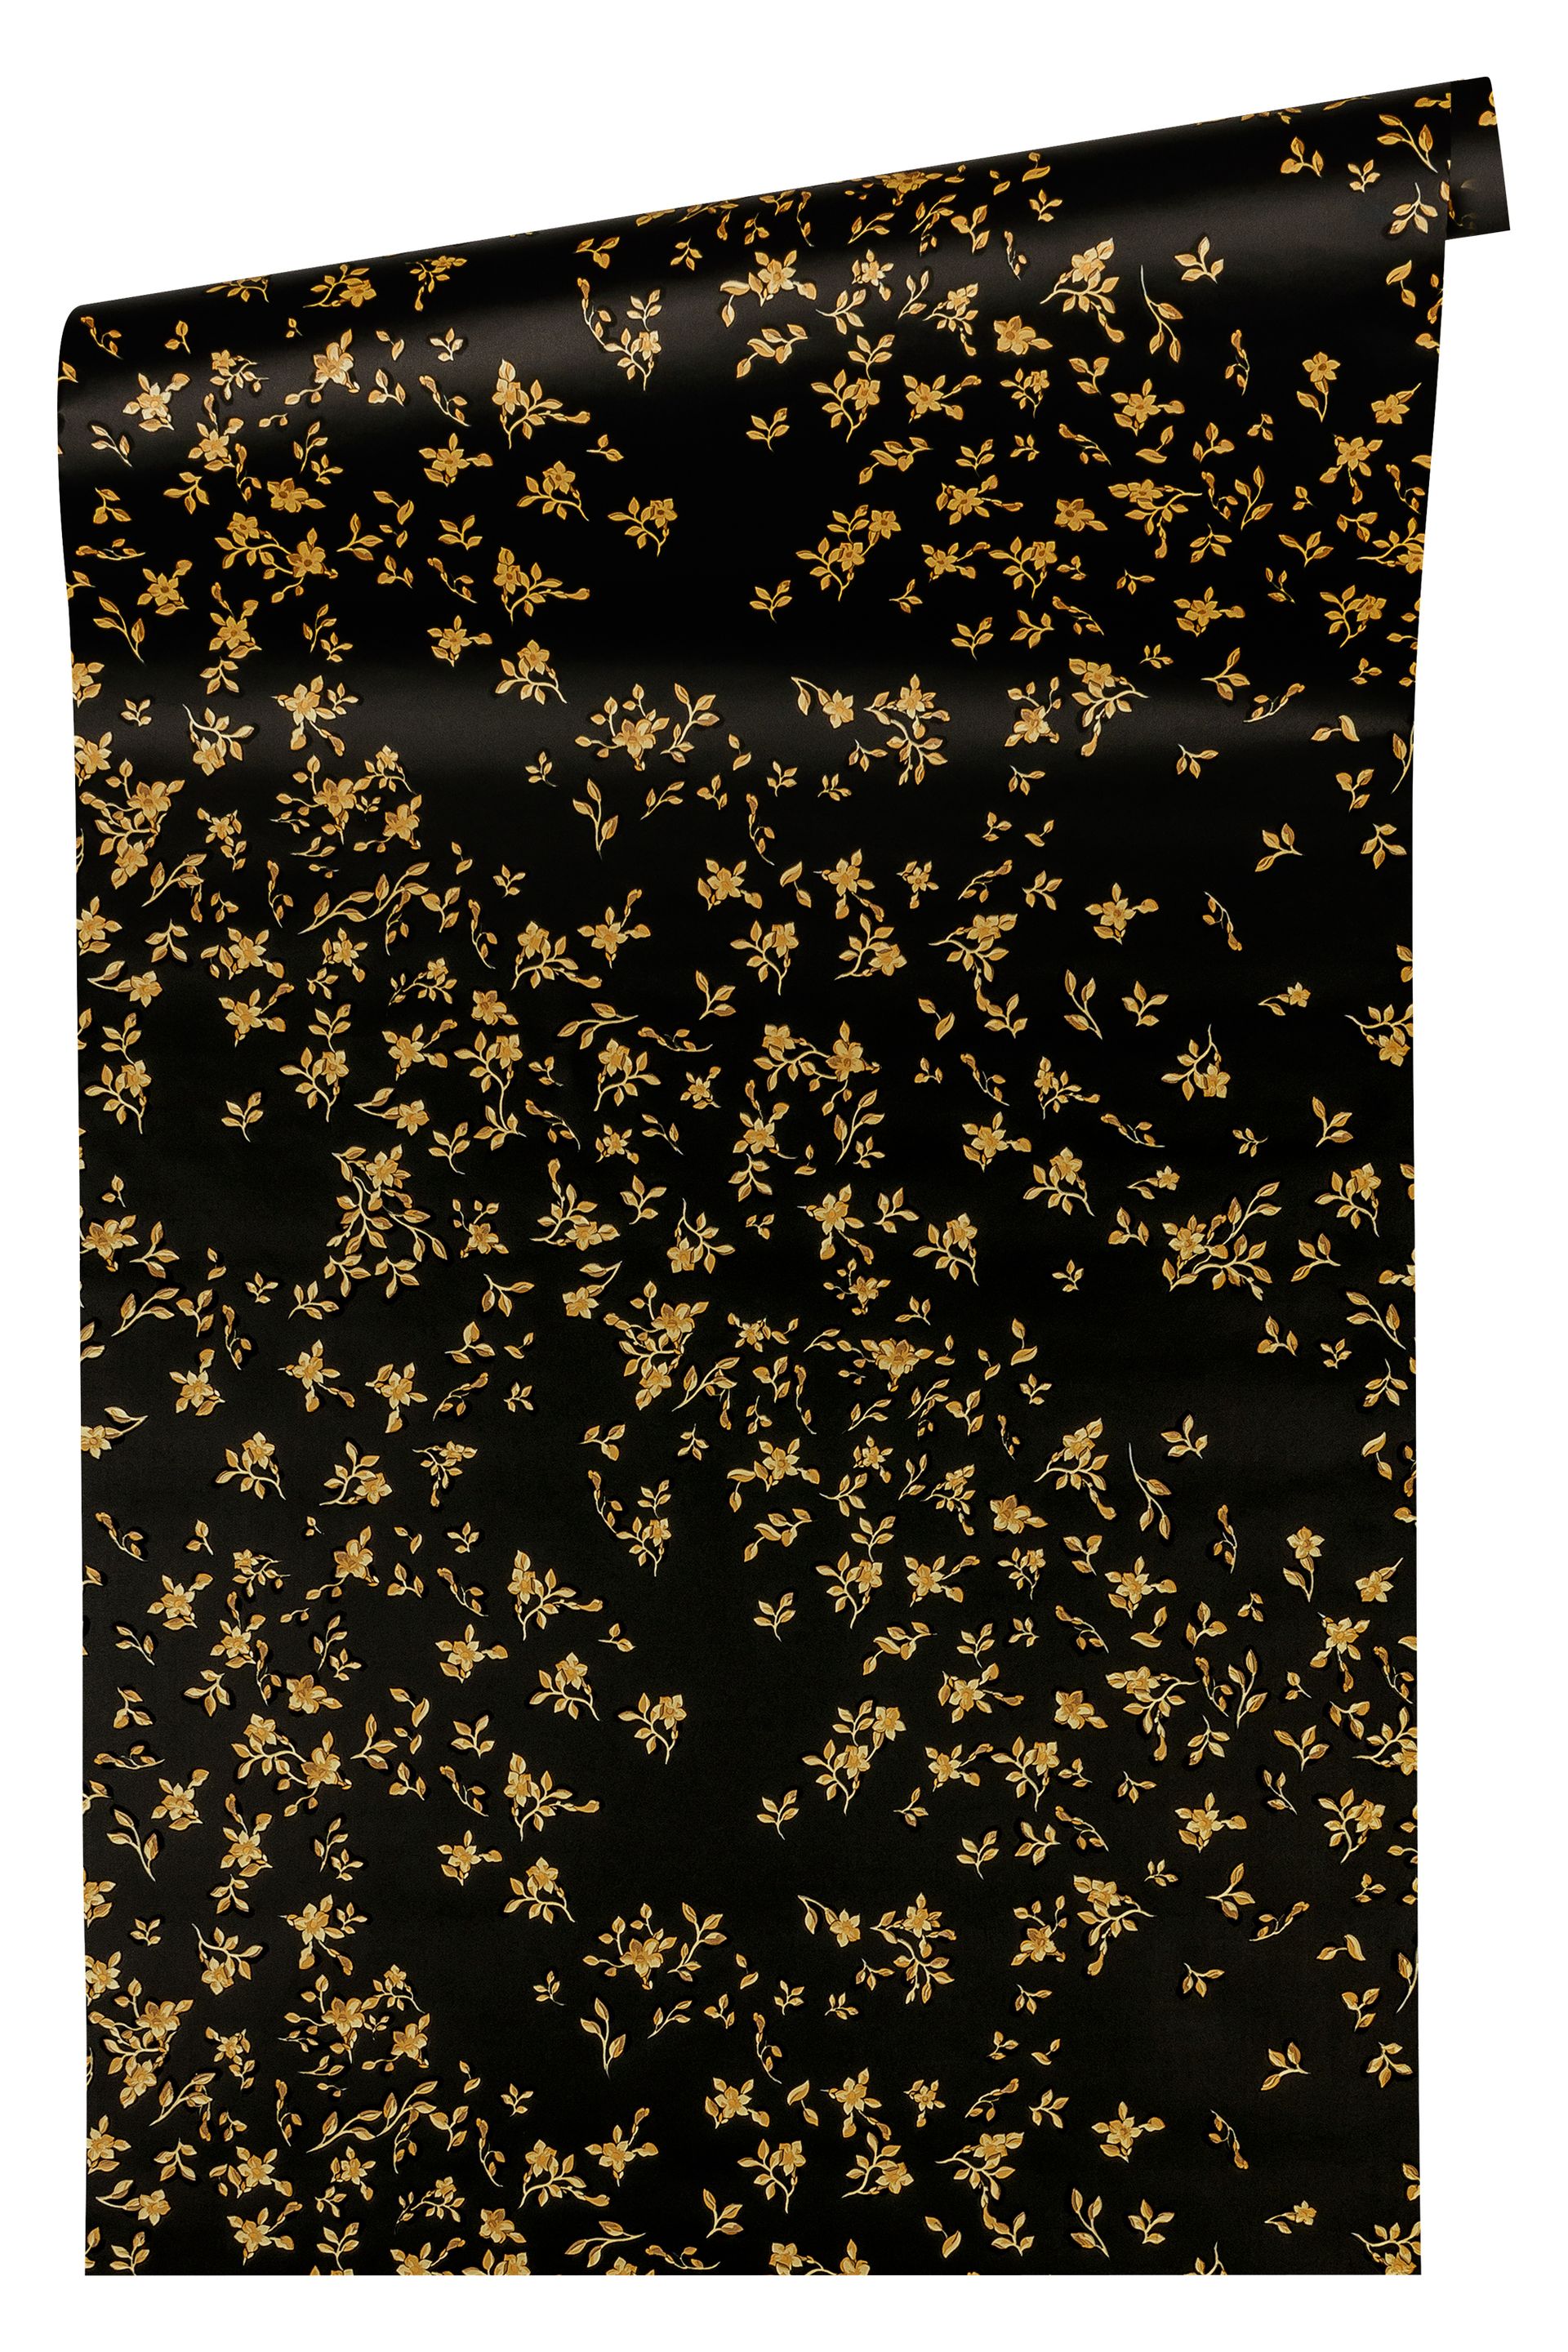 Versace wallpaper Versace 4, Florale Tapete, schwarz, gold 935854